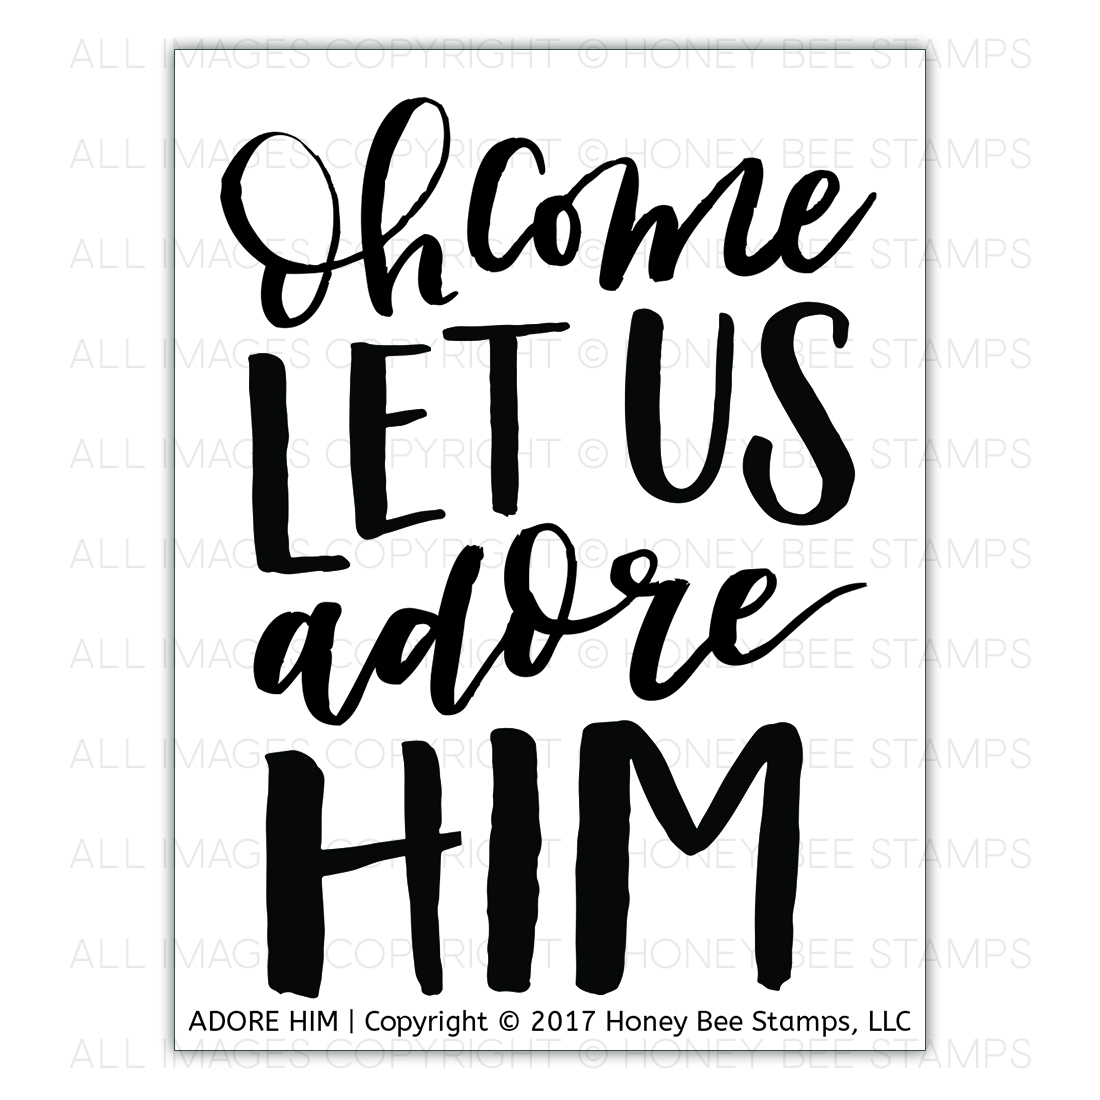 Adore Him